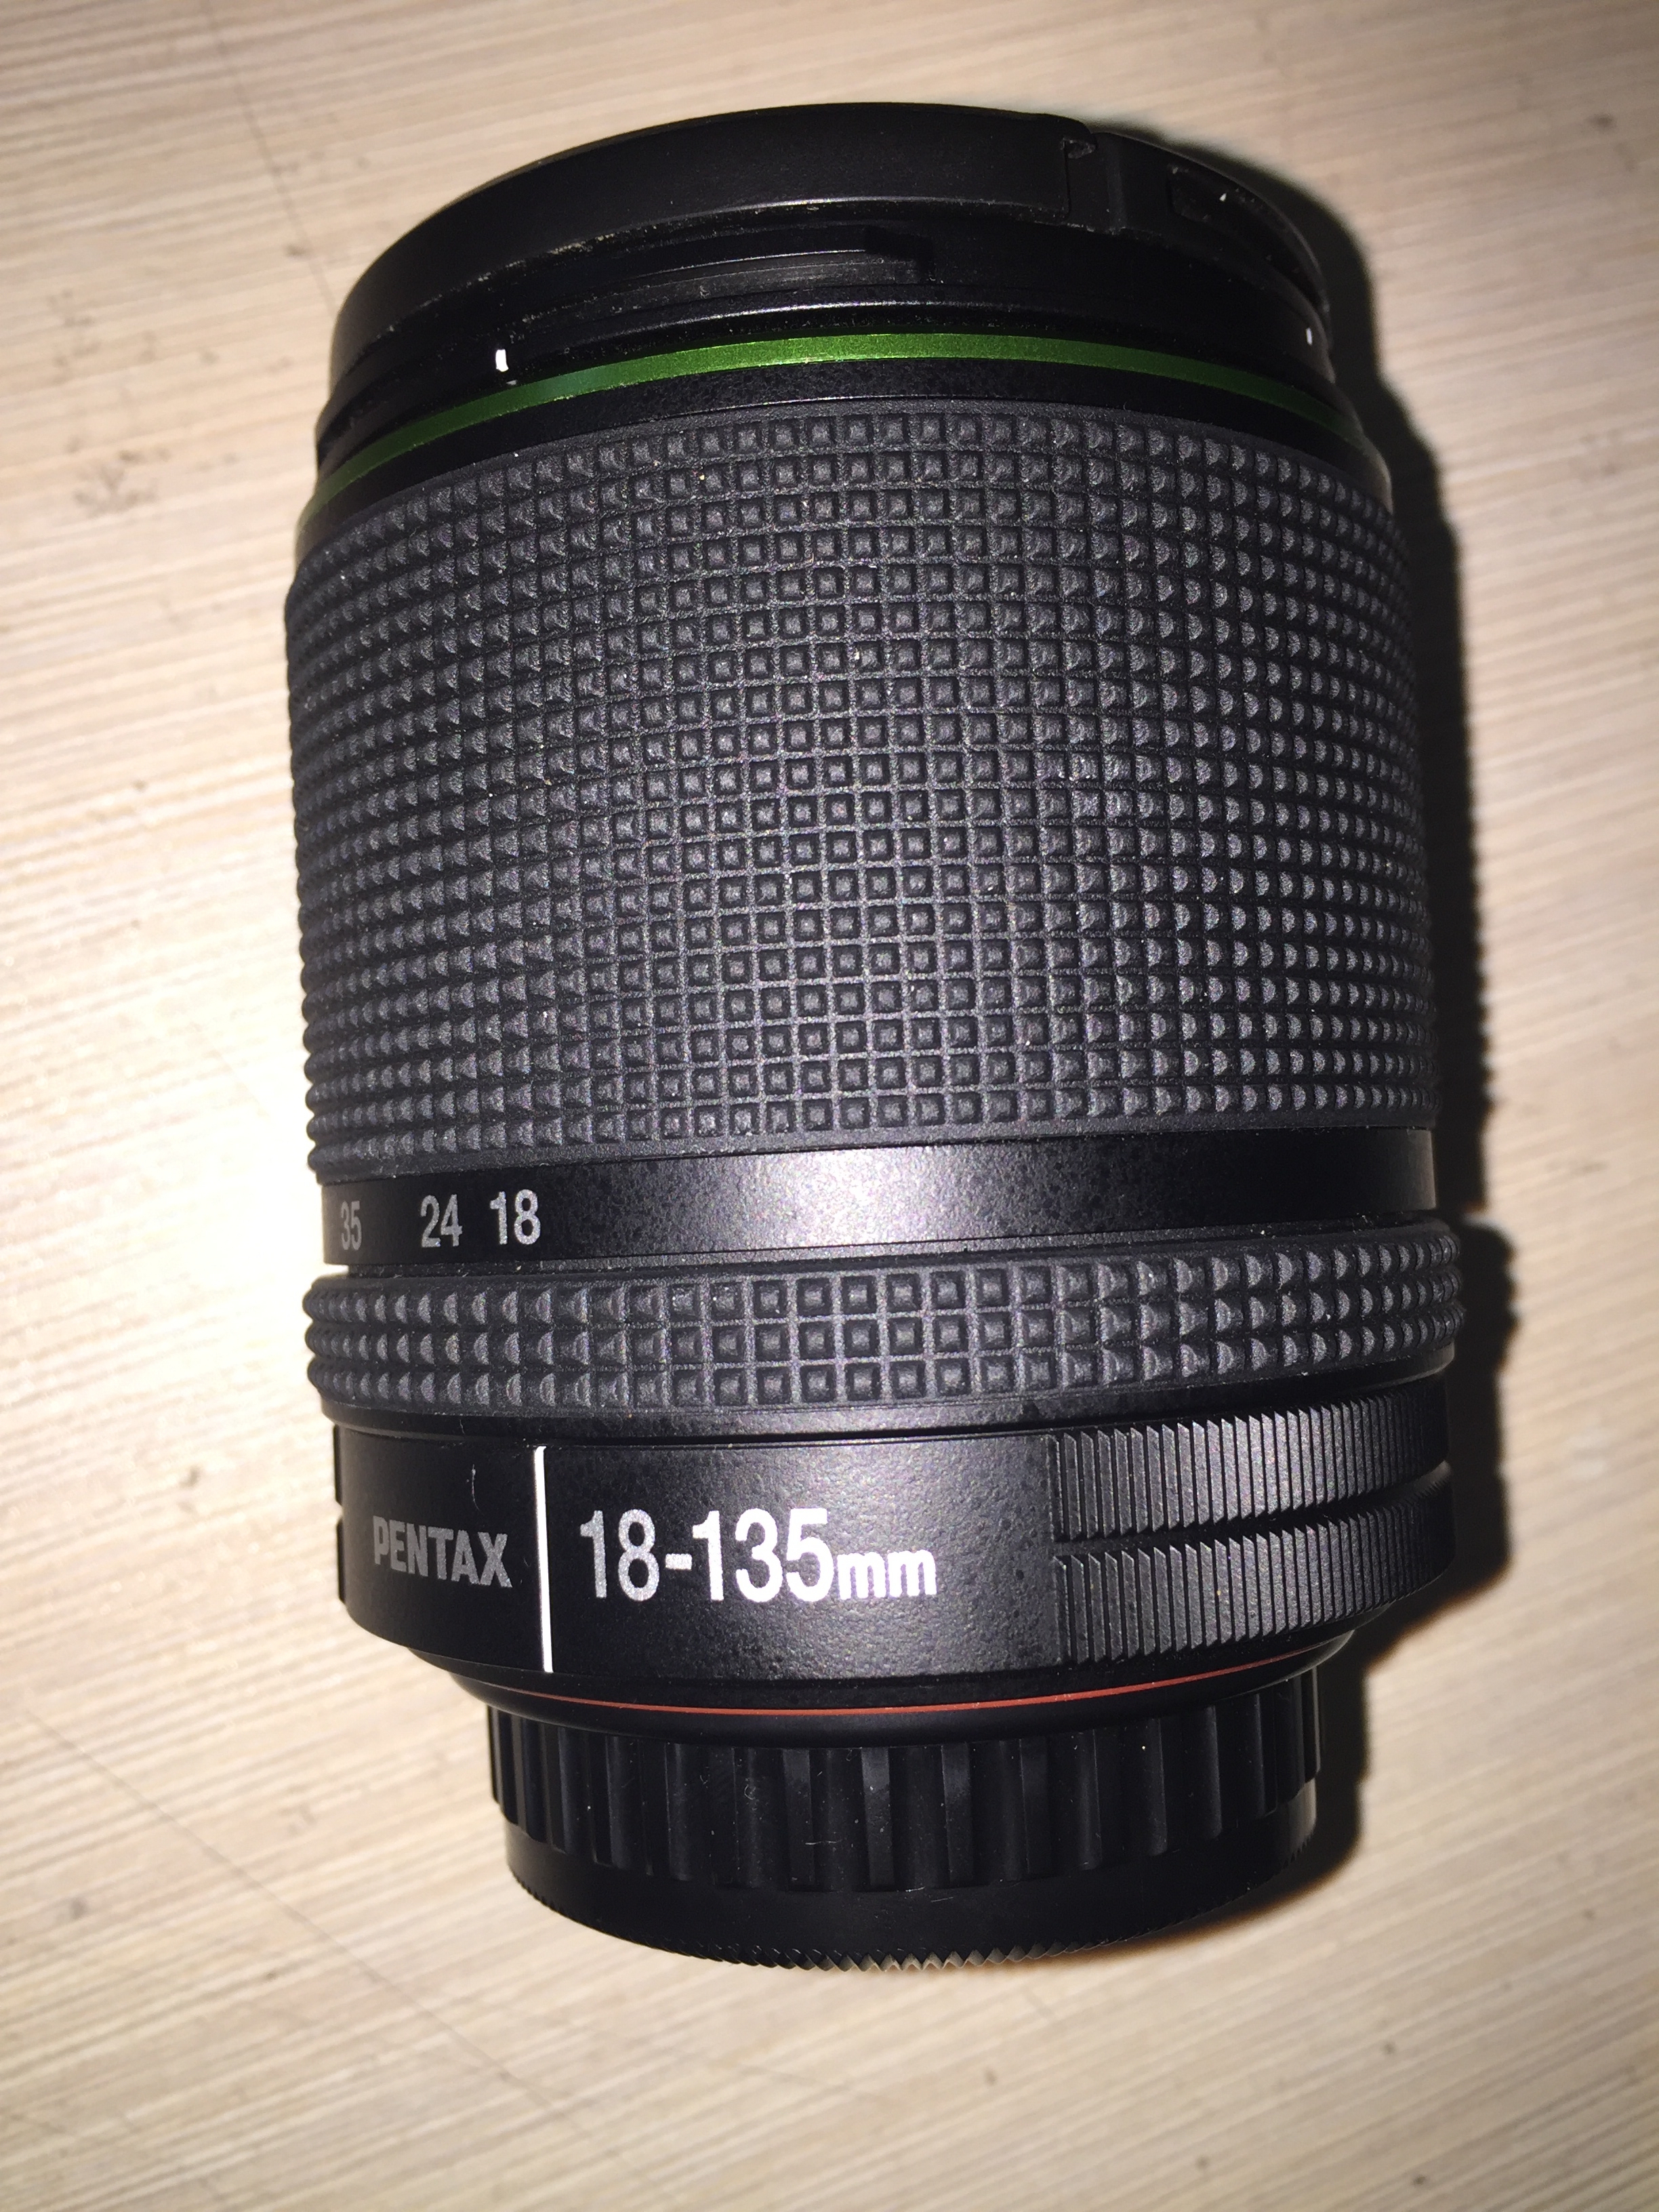  Pentax DA 18-135mm green circle lens